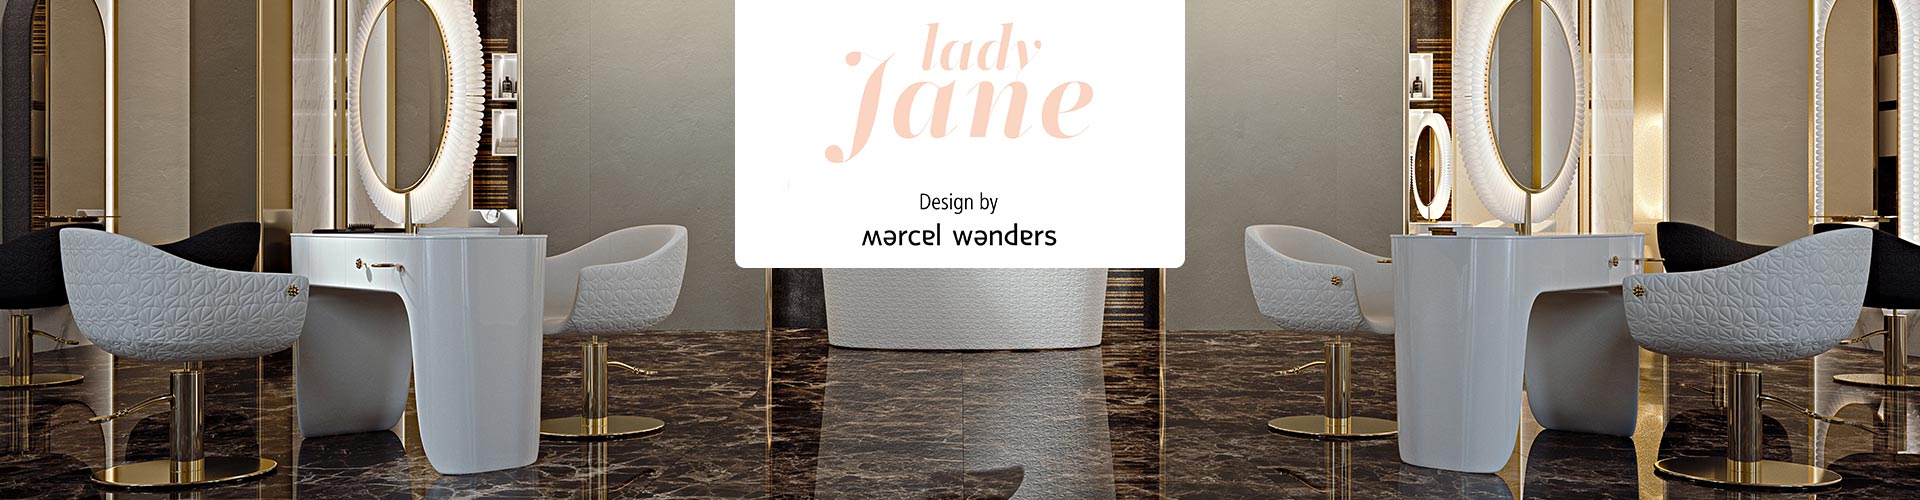 slide lady jane marcel wanders v2 - Accueil